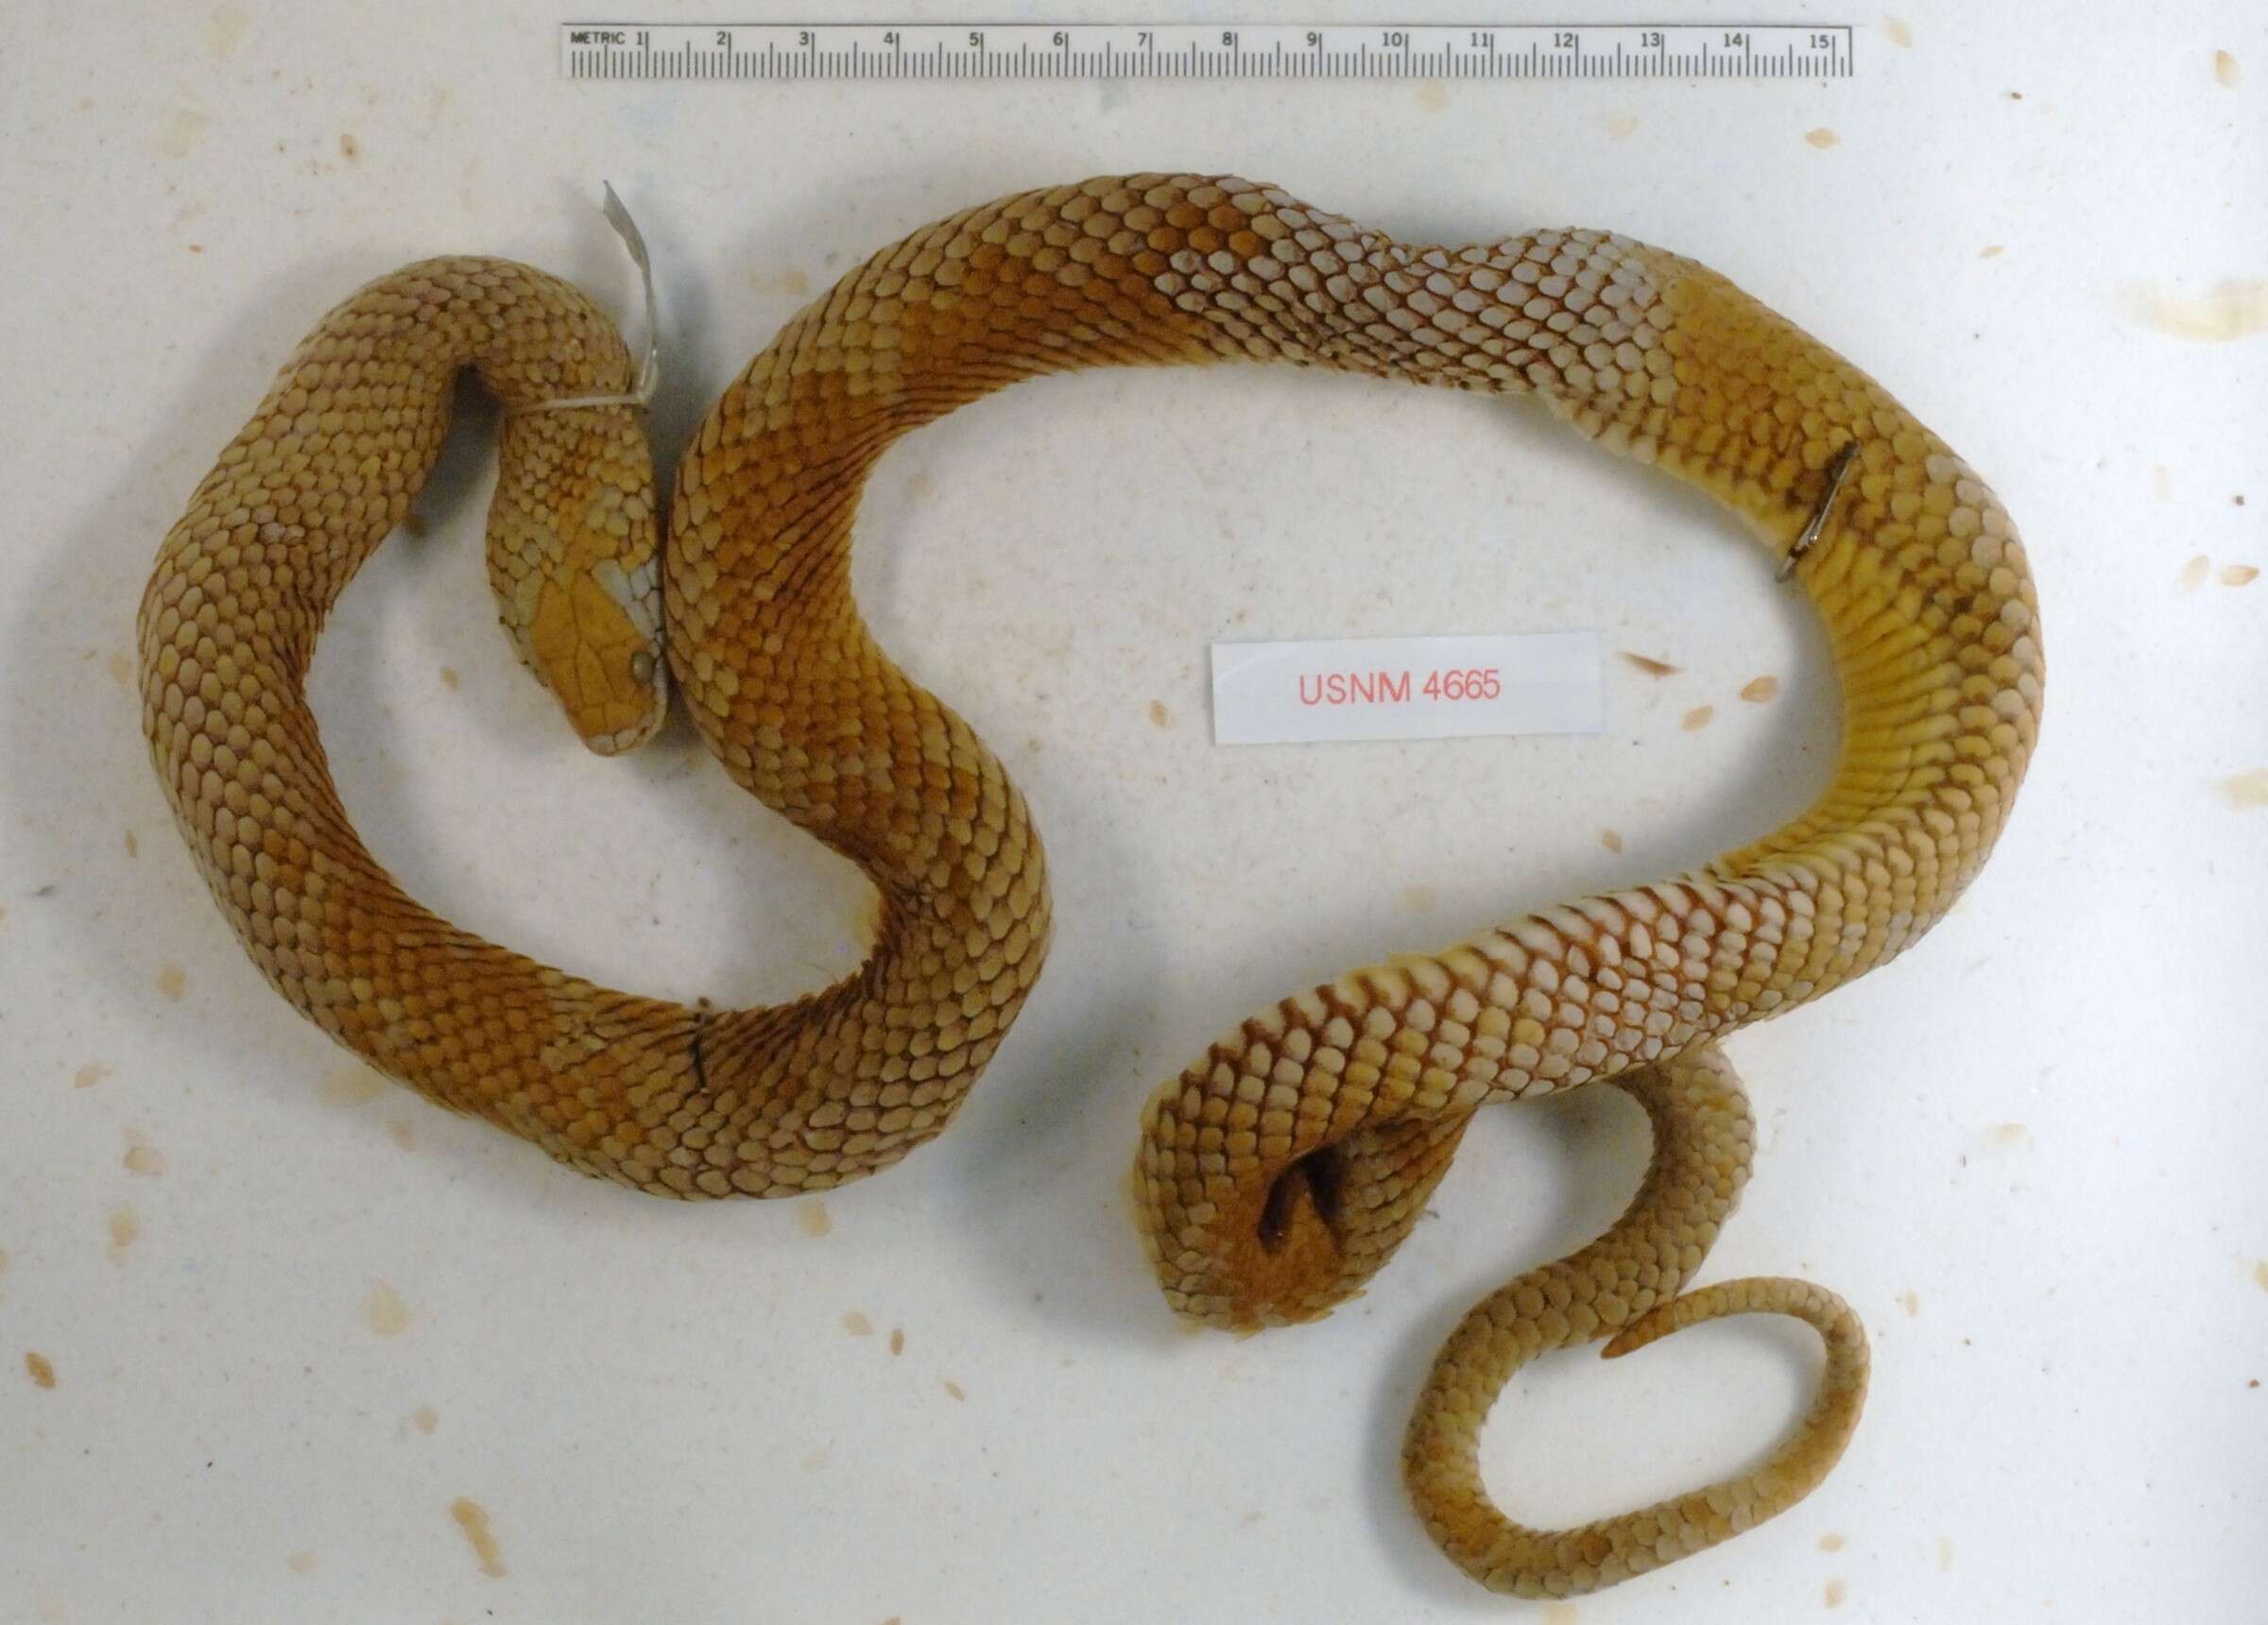 Image of Military ground snake